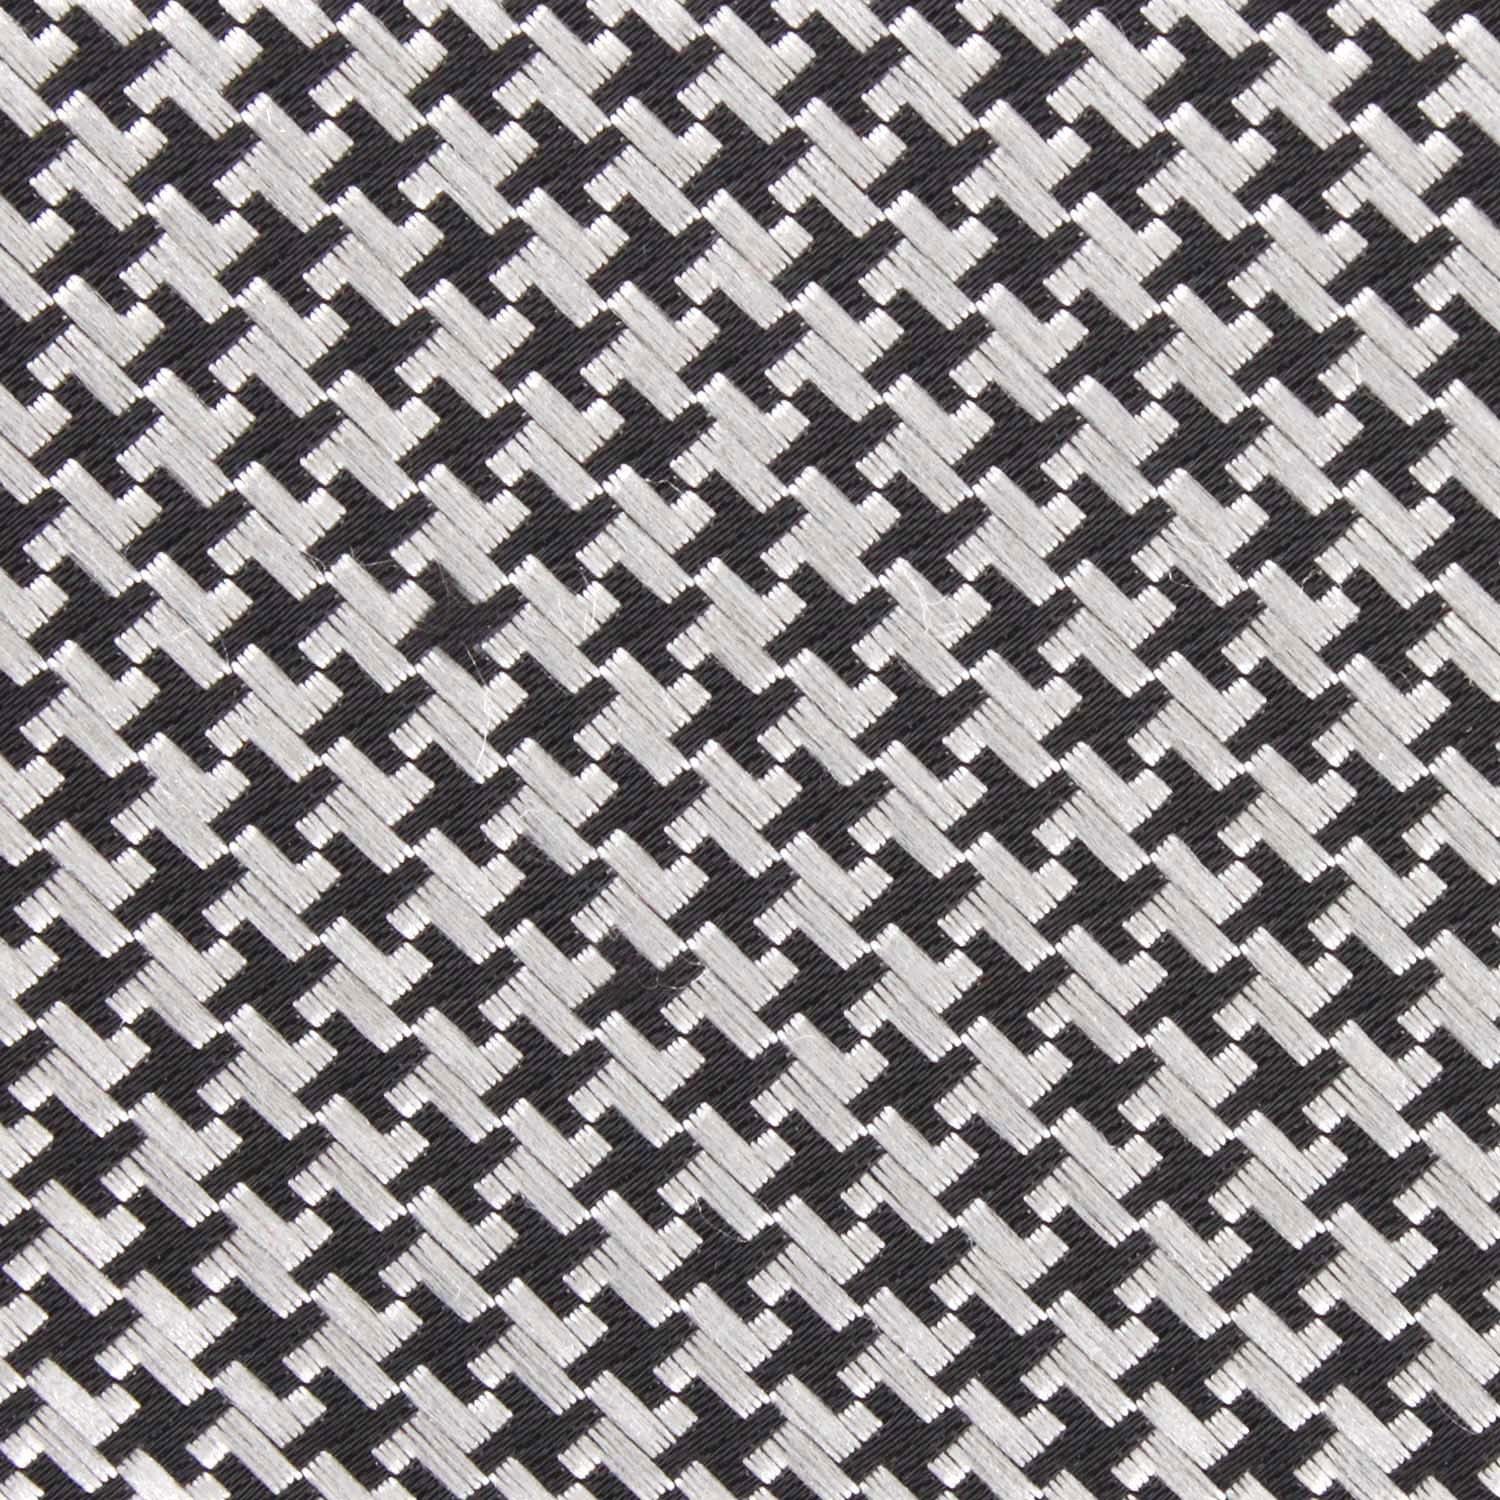 Black & Silver Houndstooth Pattern Fabric Self Tie Diamond Tip Bow TieM110